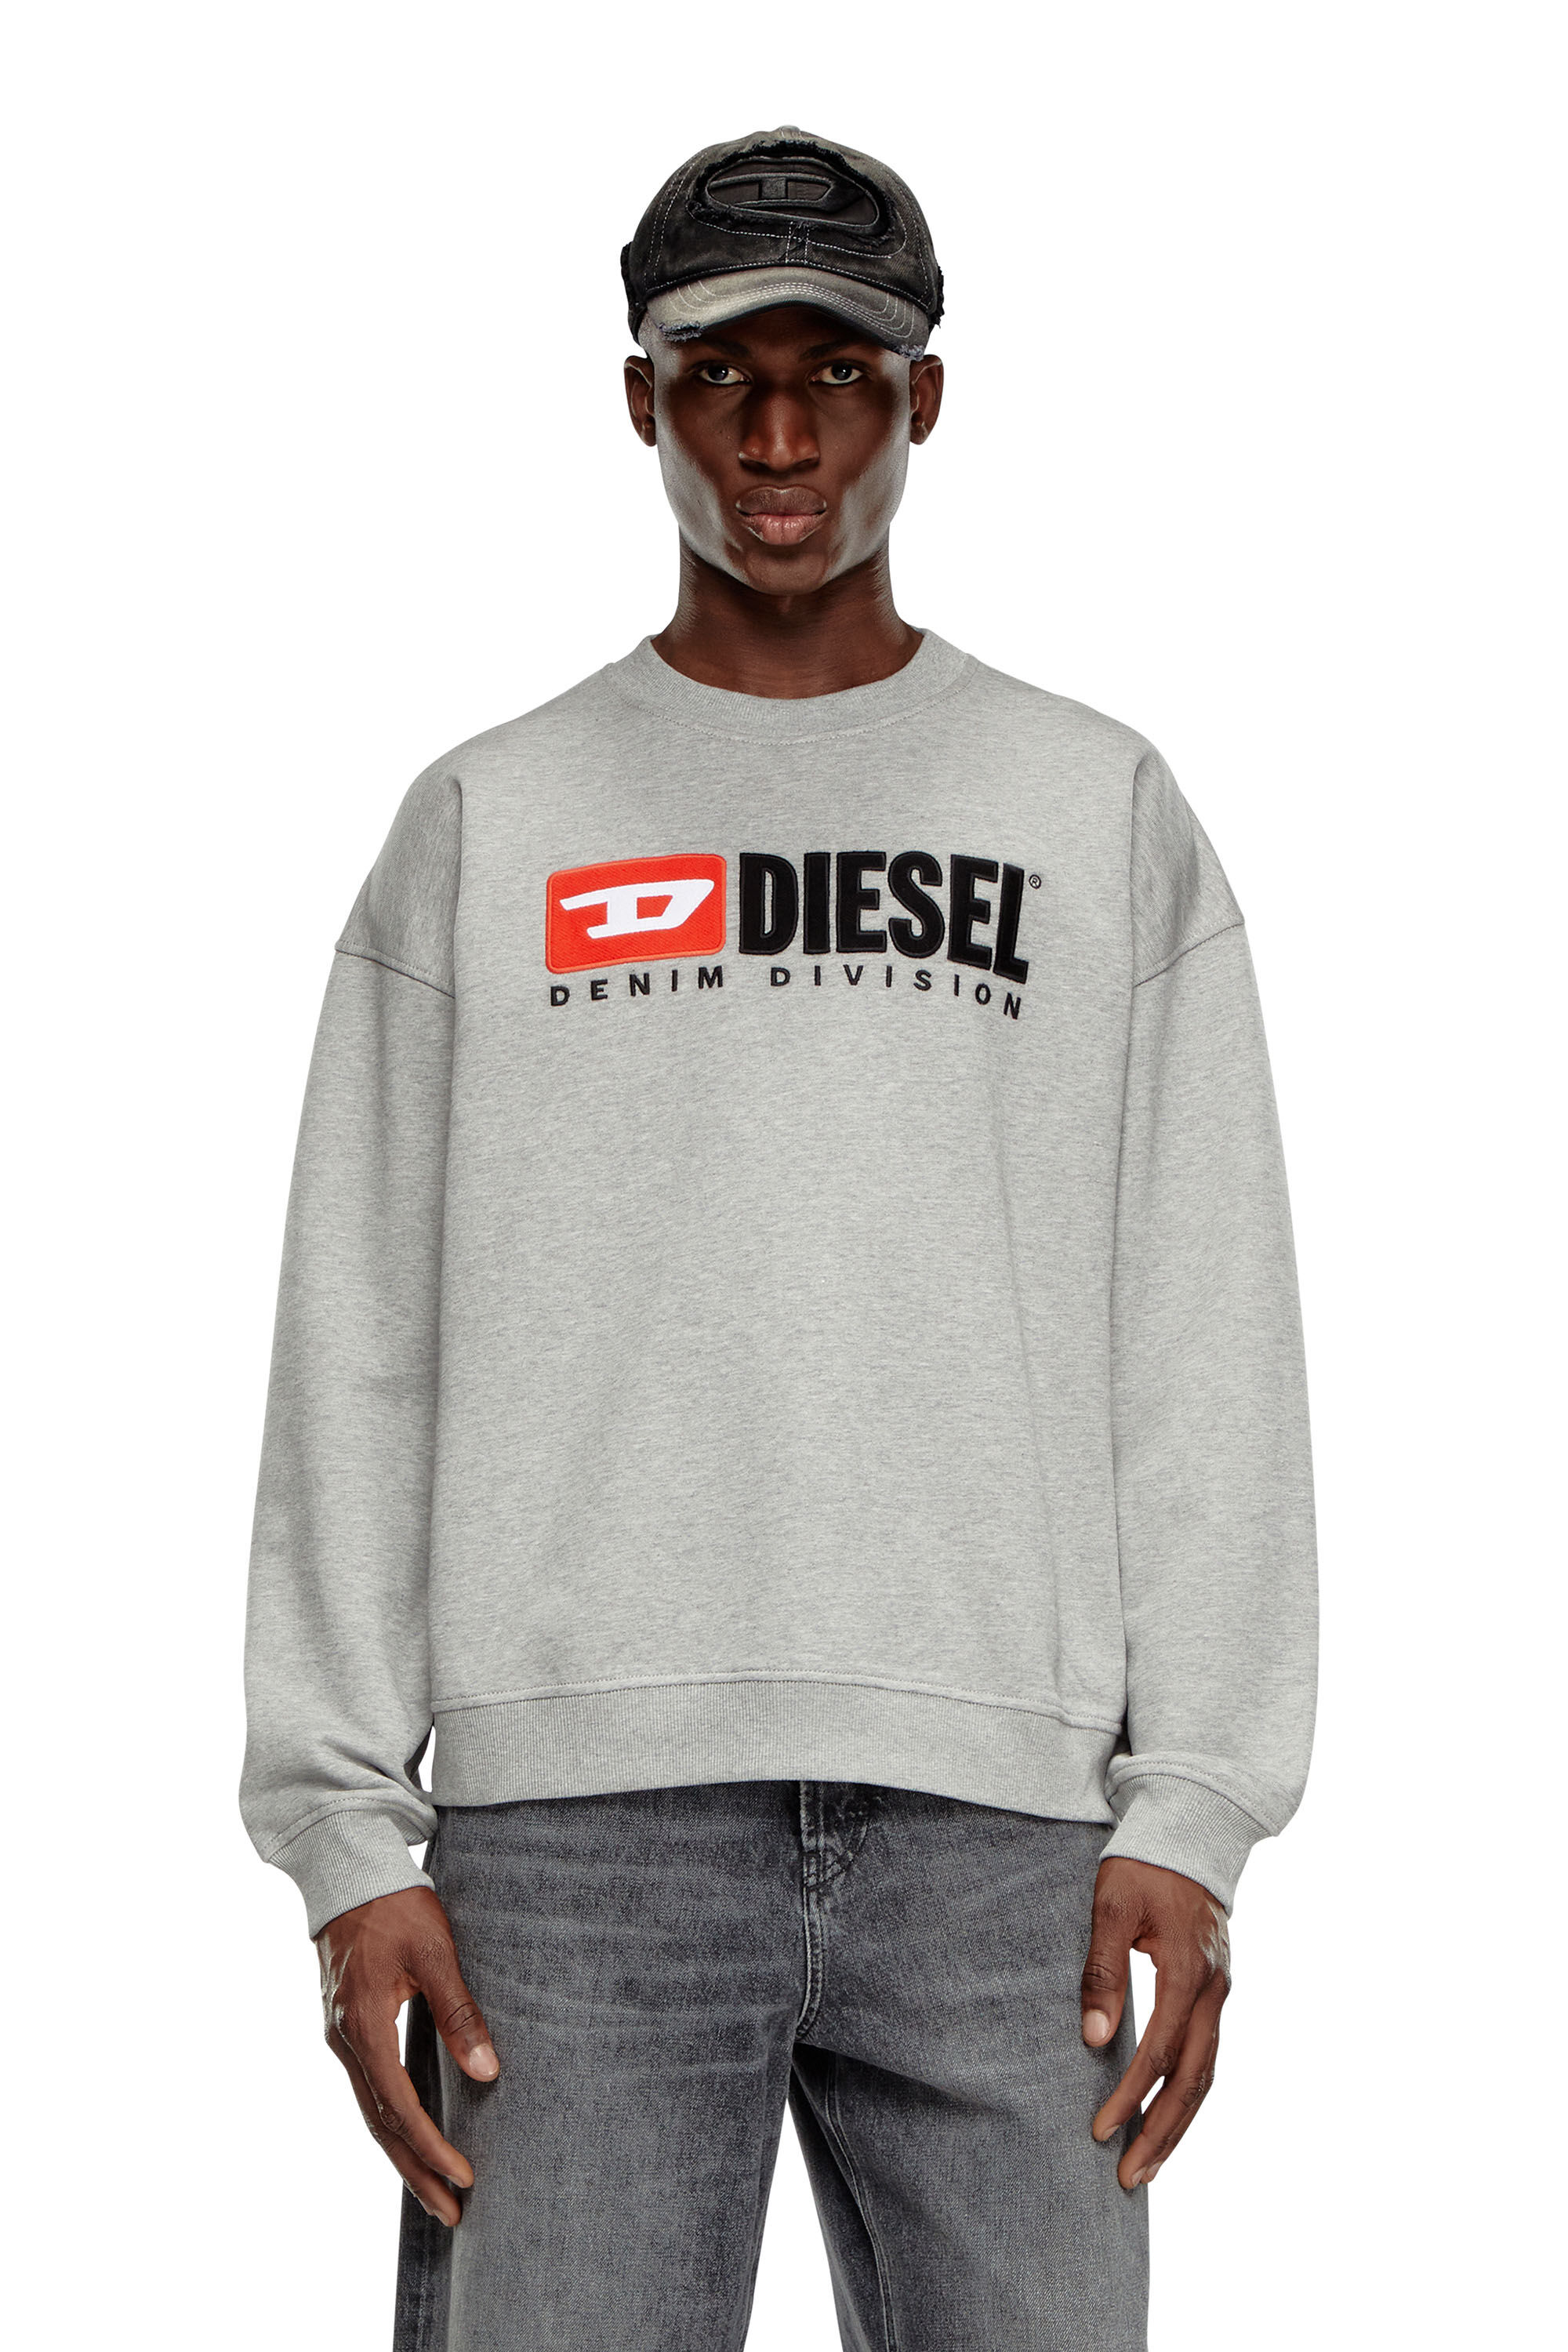 Diesel - S-BOXT-DIV, Man Sweatshirt with Denim Division logo in Grey - Image 3